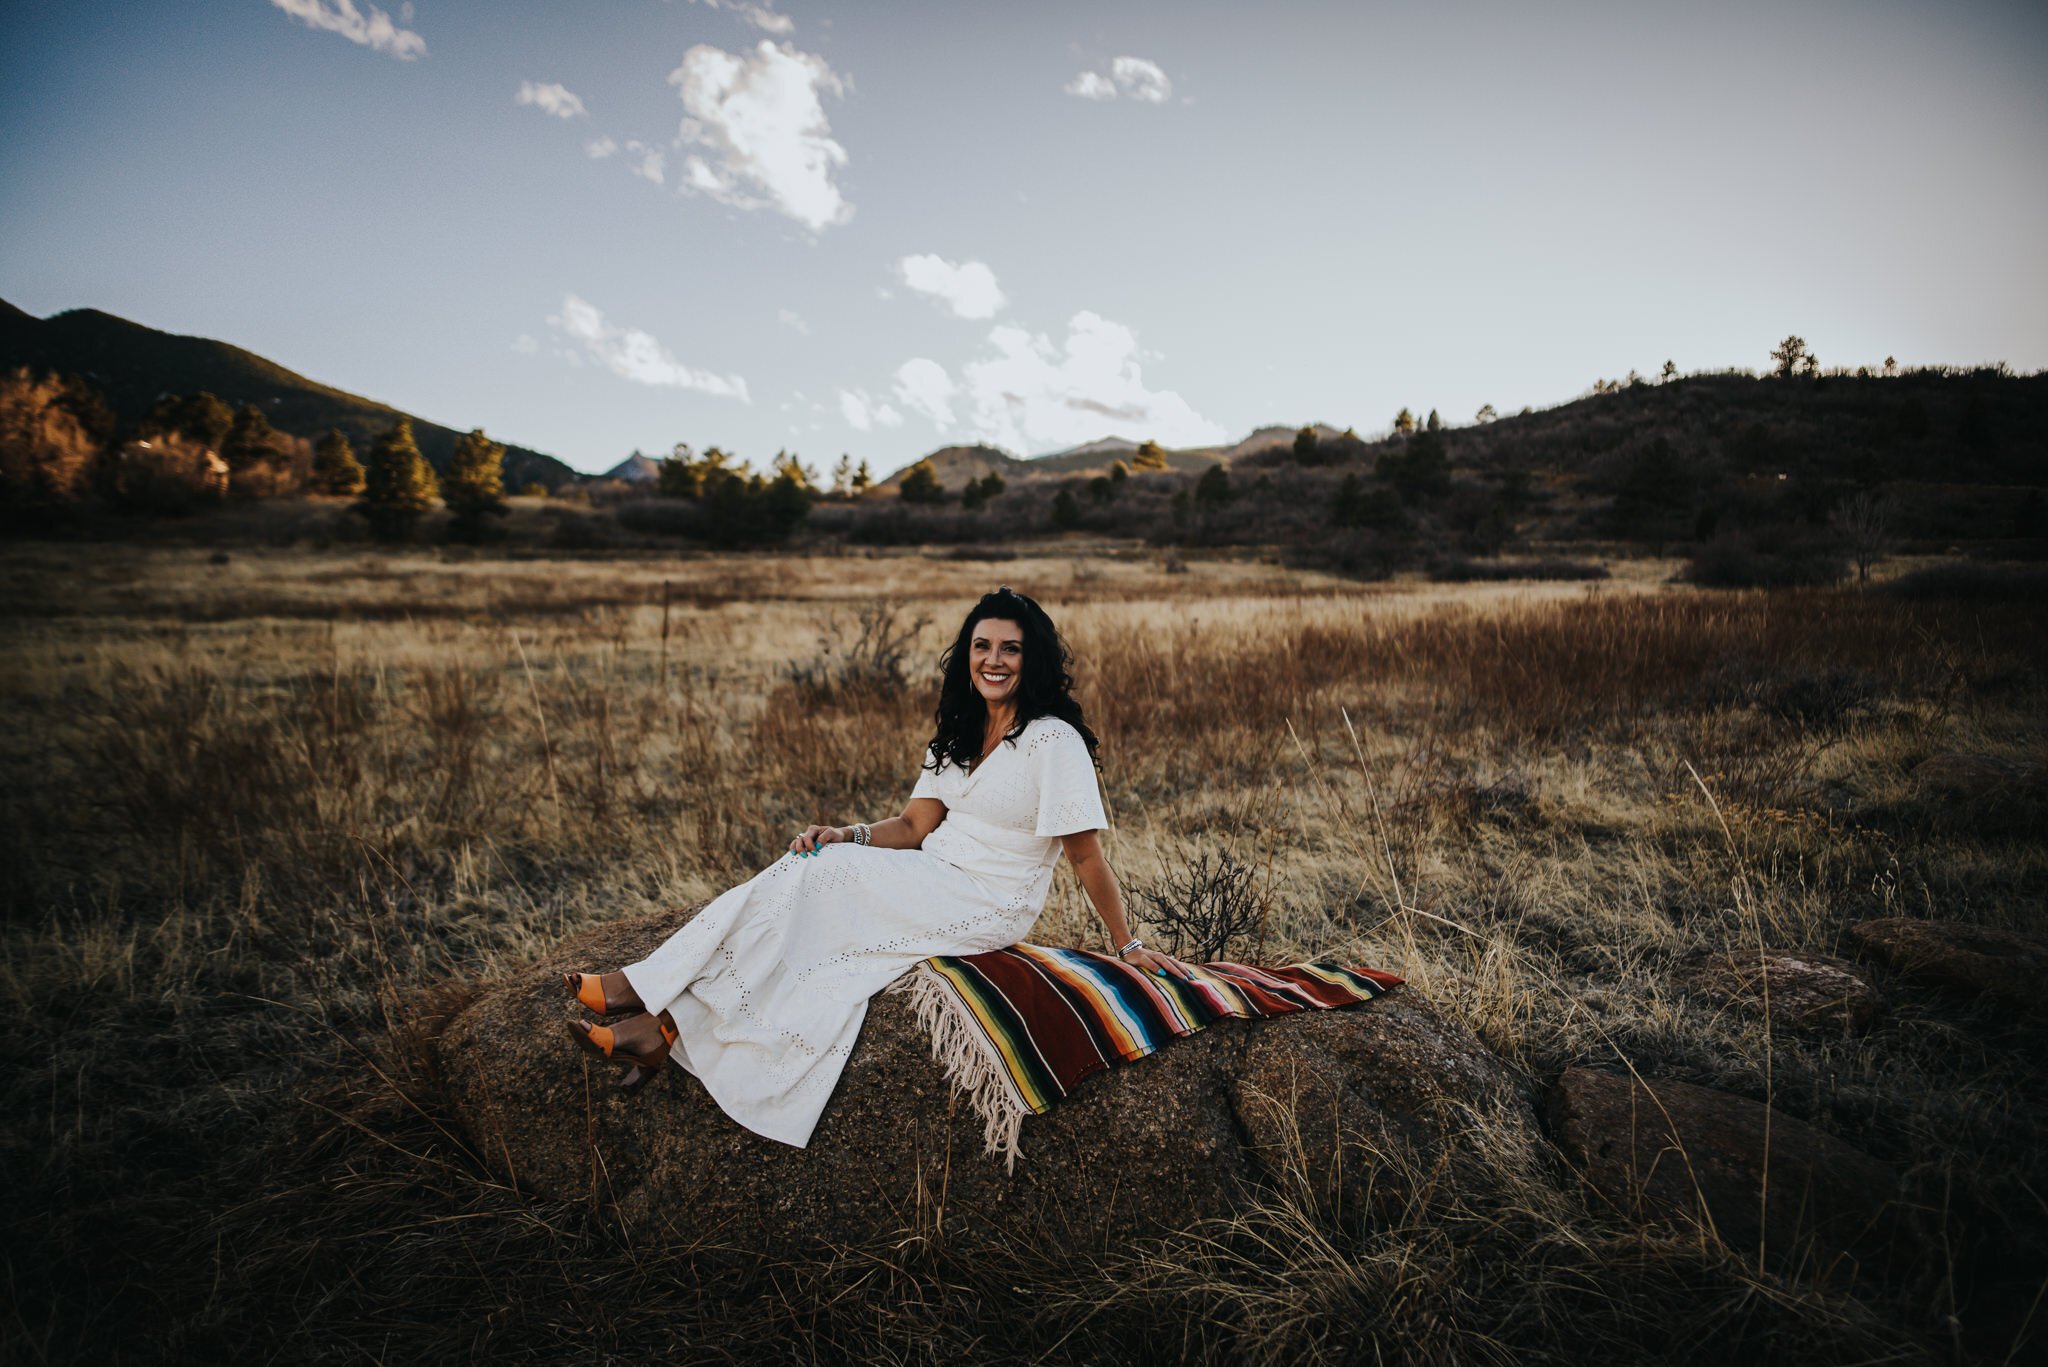 Celi+Turner+Headshots+Colorado+Springs+Colorado+Sunset+Mountains+Field+Woman+Wild+Prairie+Photography-15-2020.jpeg